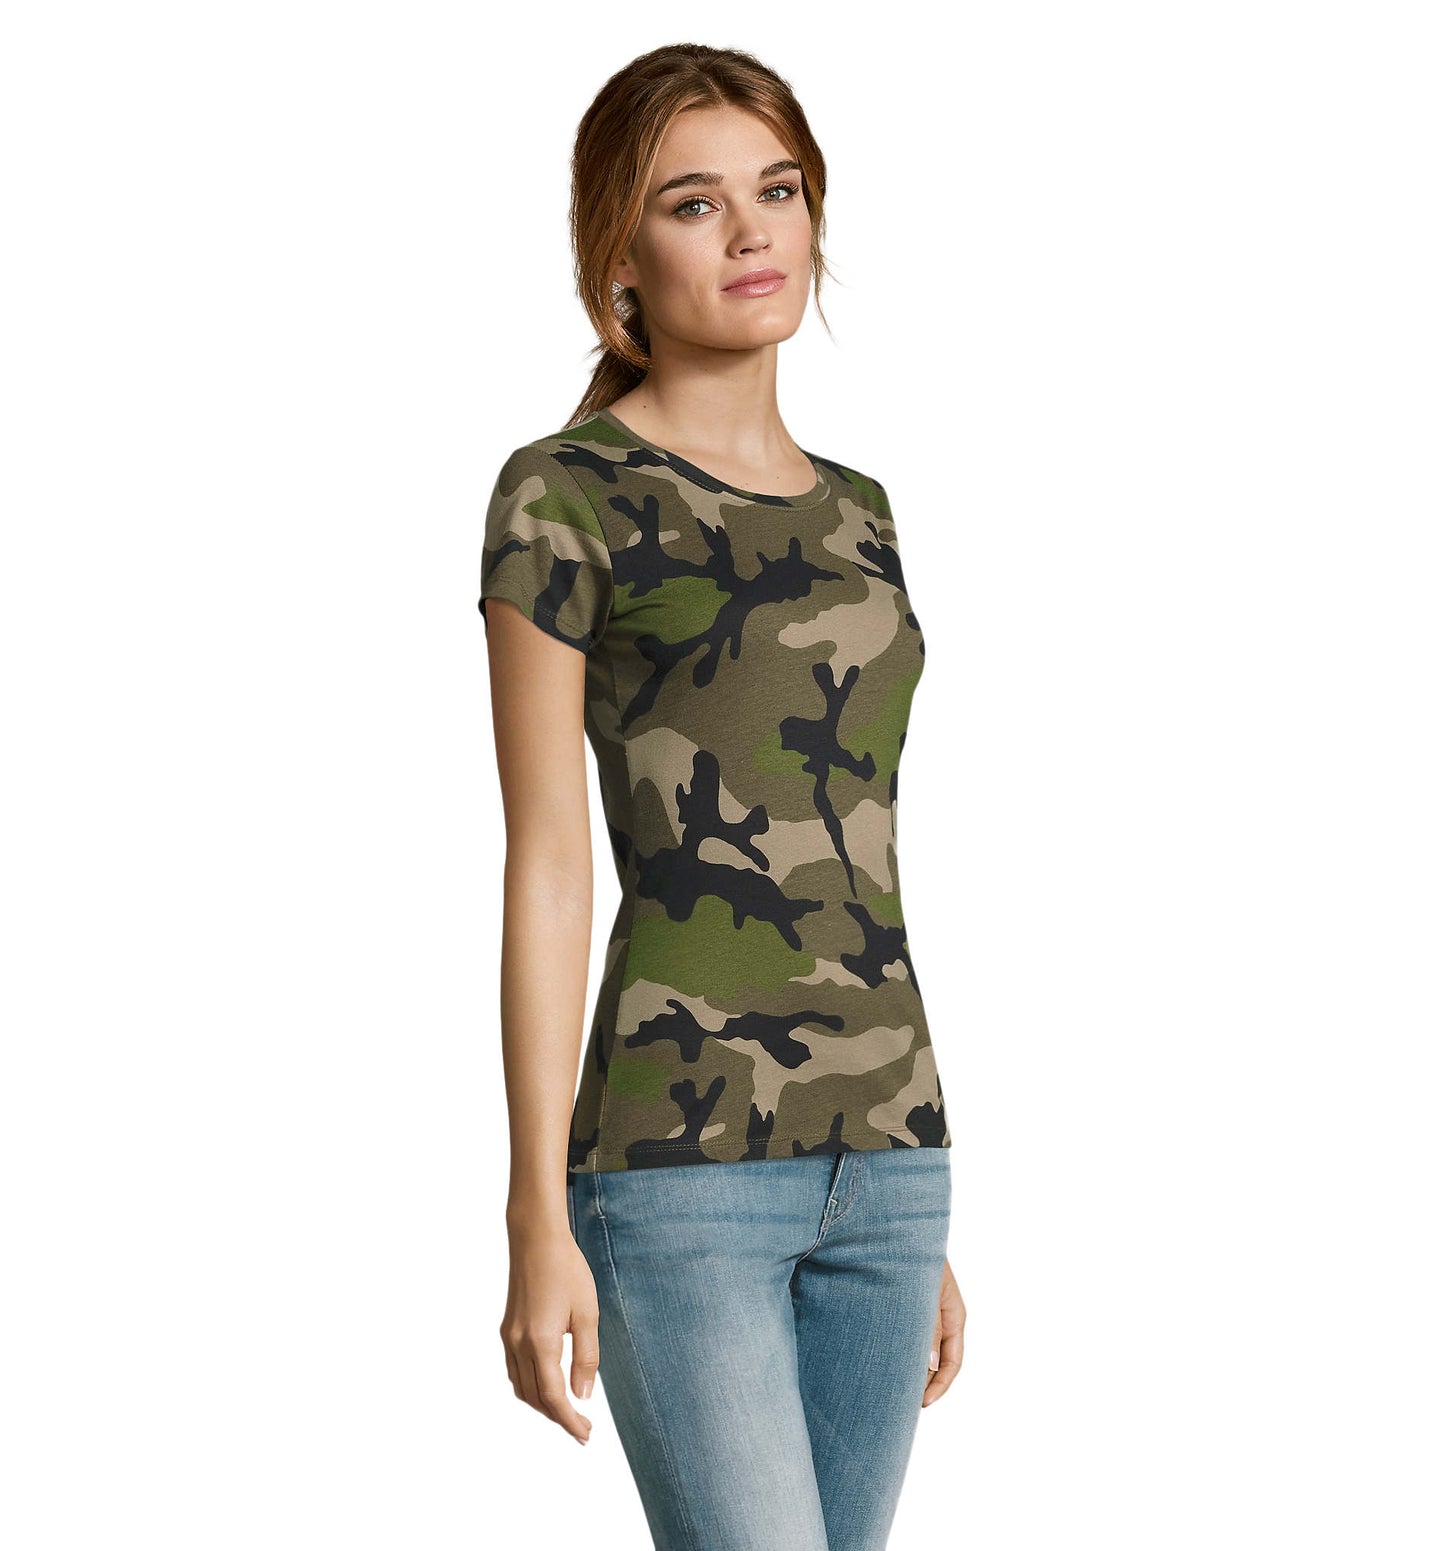 Green Camo Printed Ladies T-Shirt LTS-1187